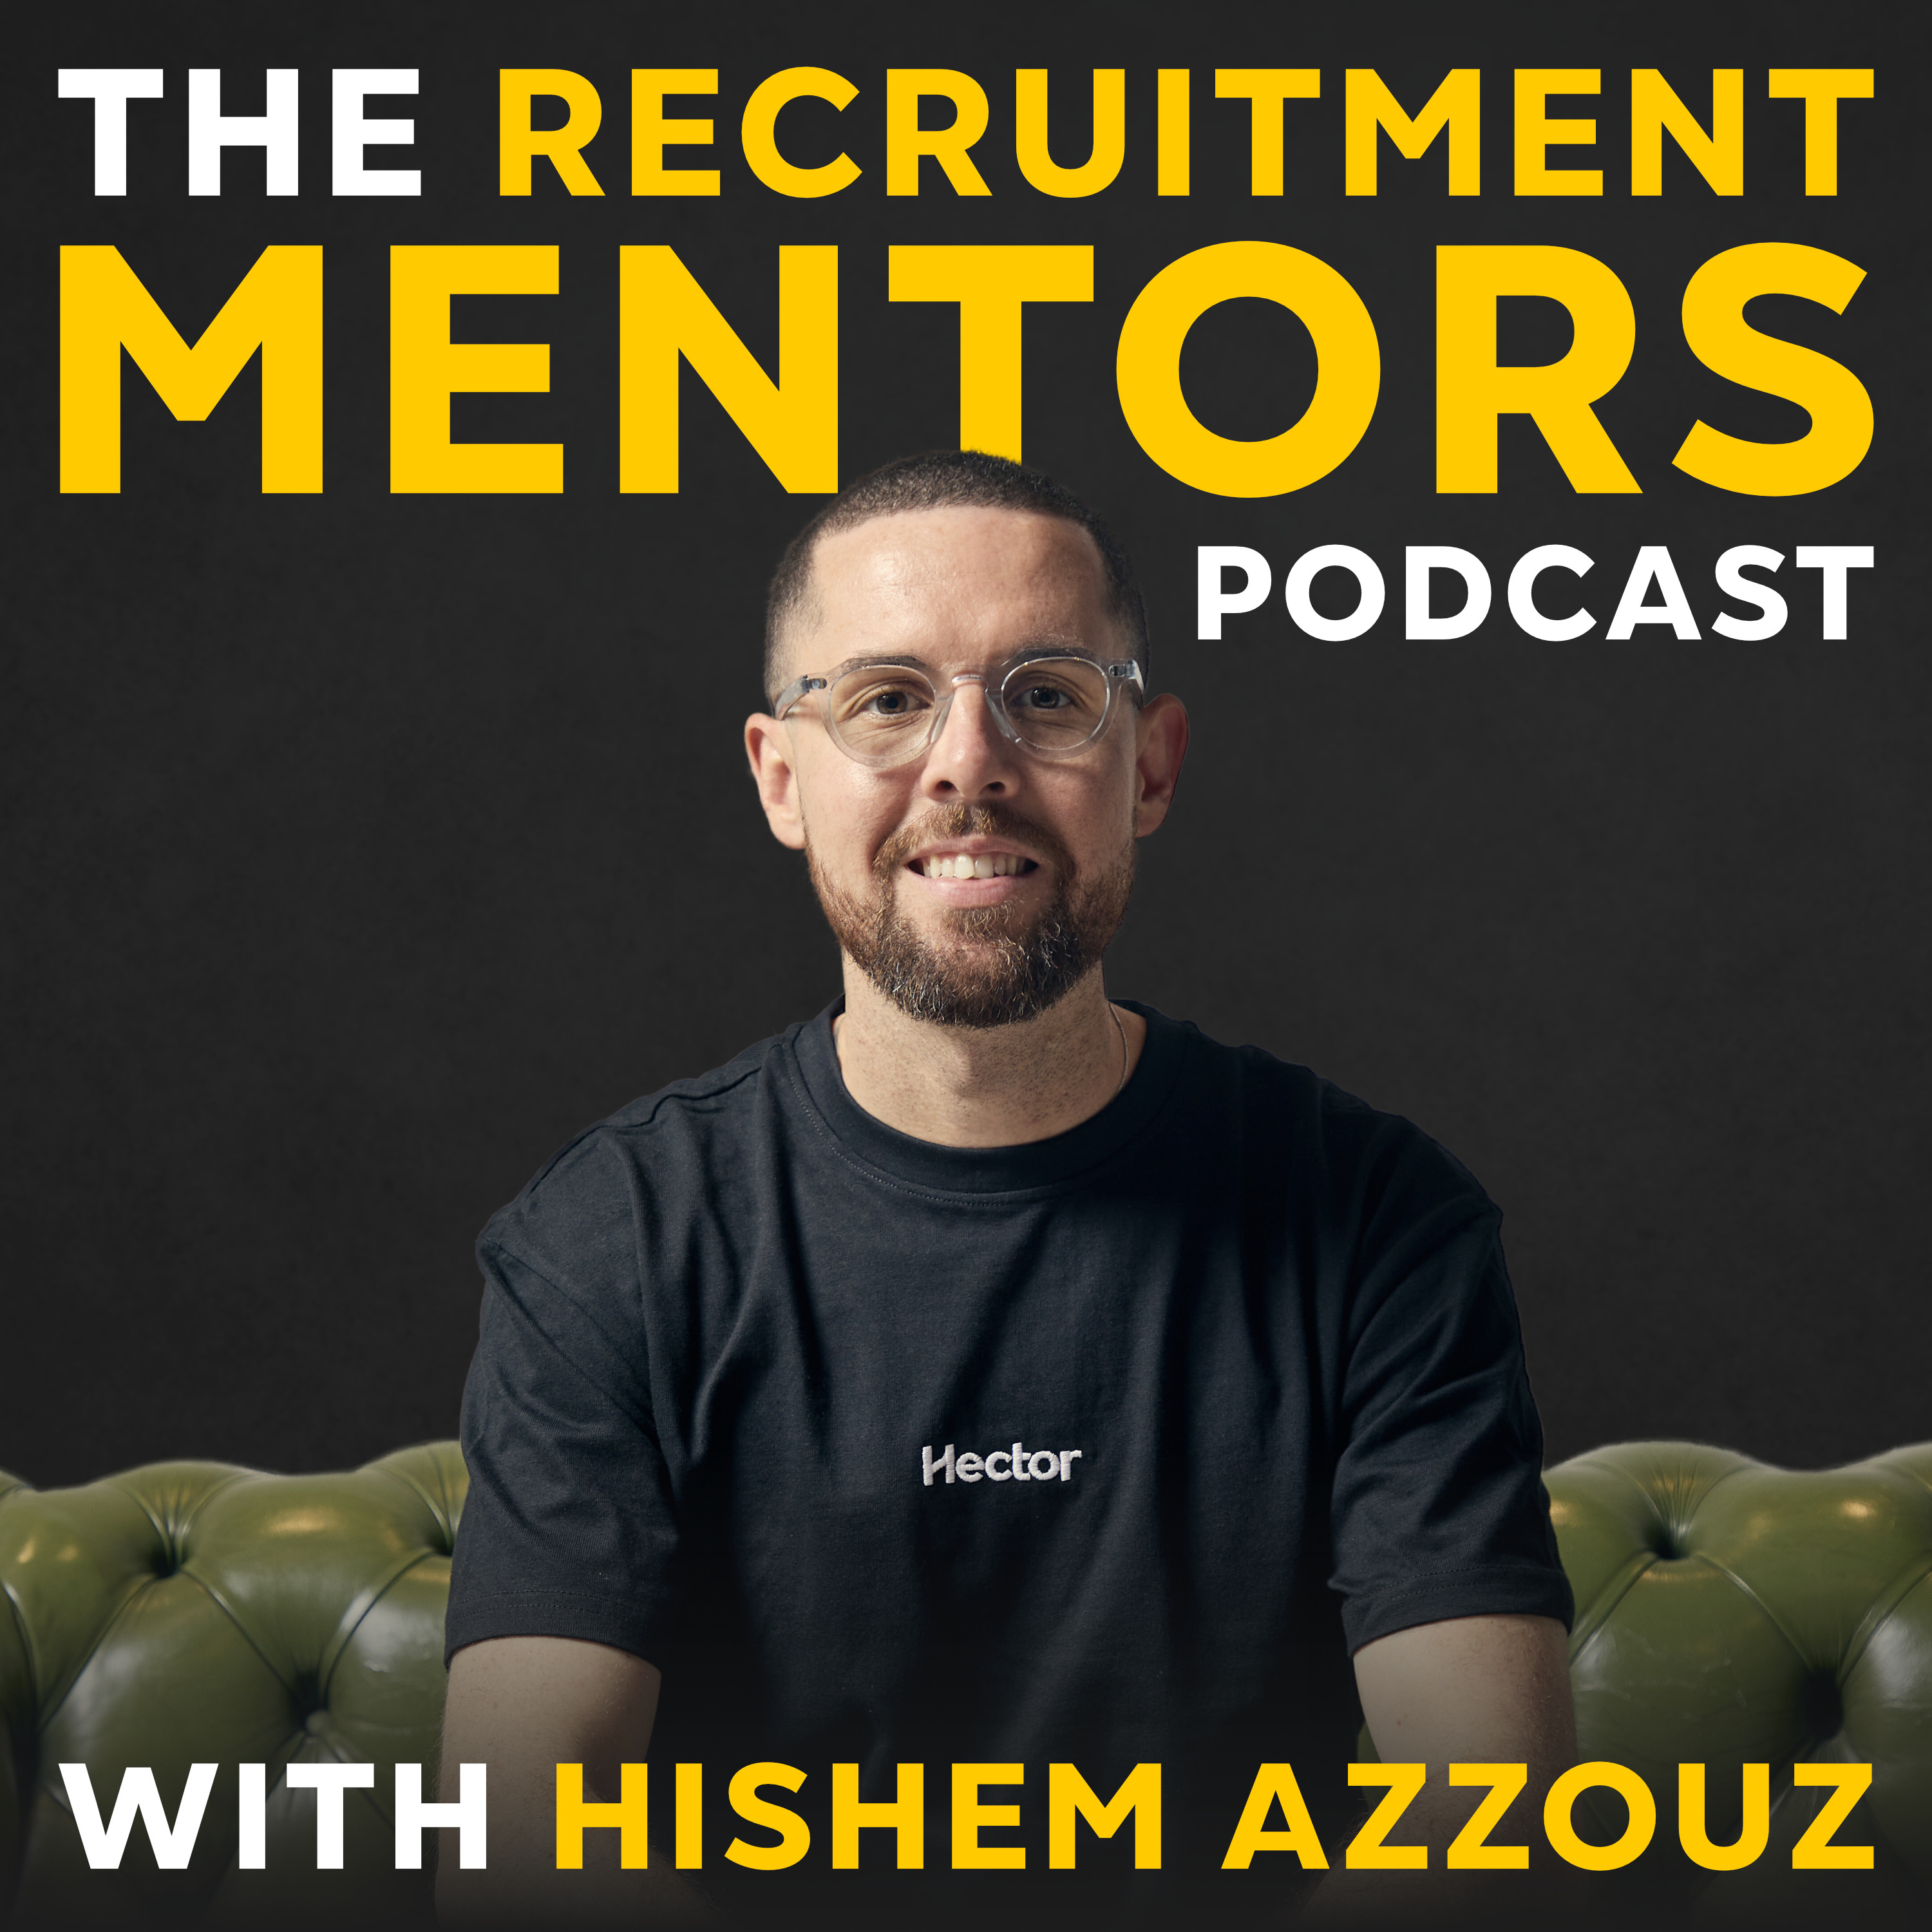 Artwork for podcast The Recruitment Mentors Podcast